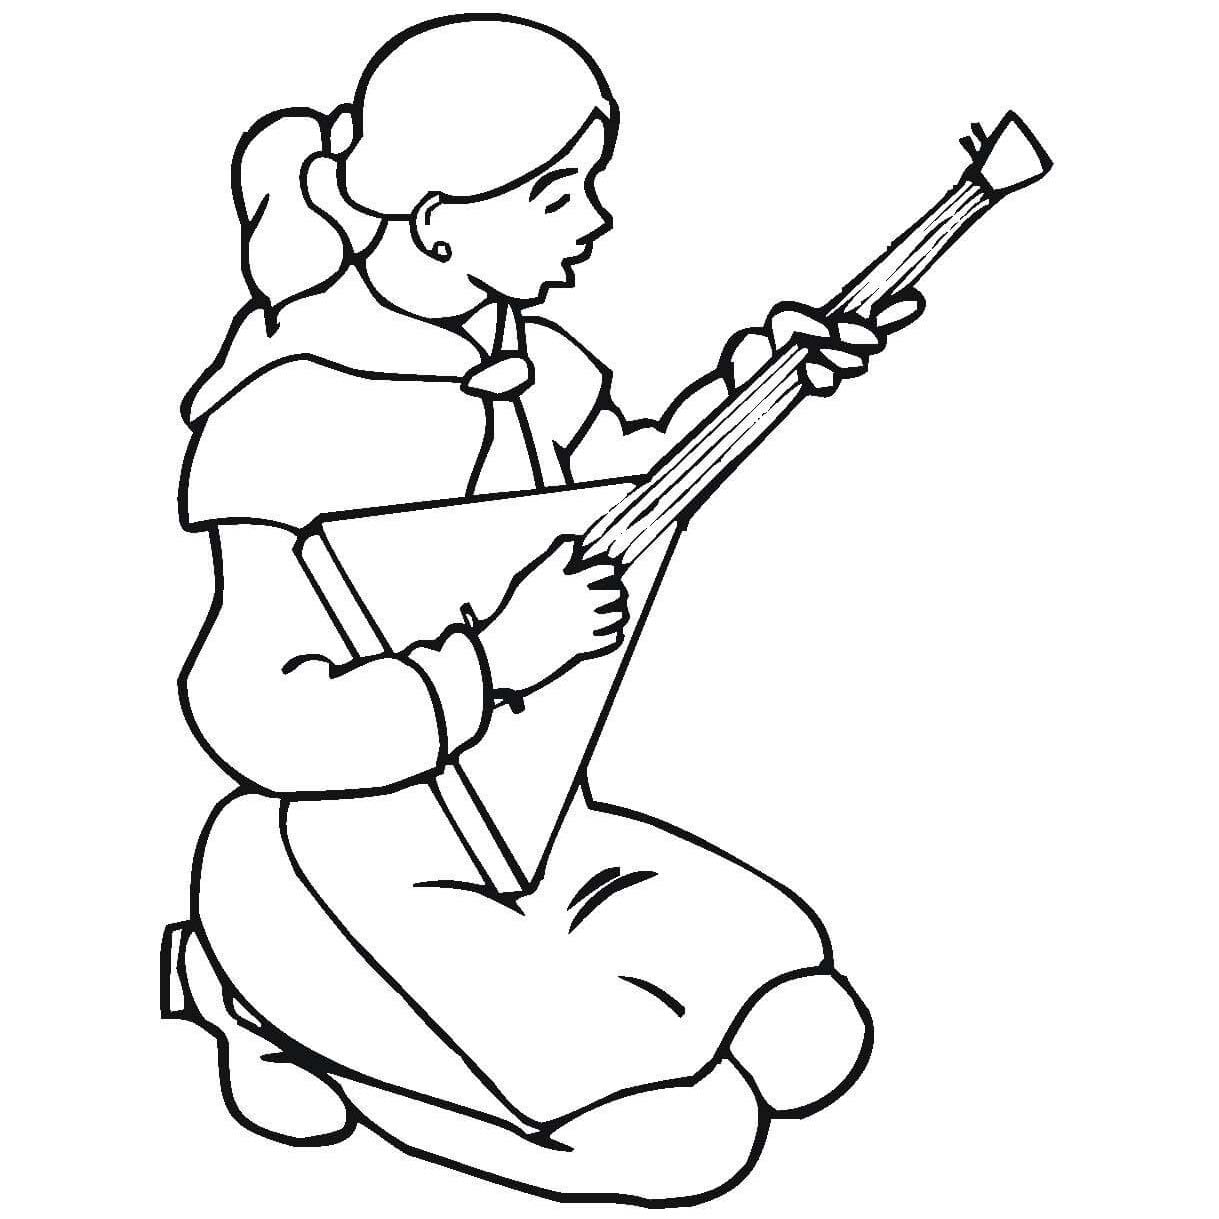 Mulher tocando balalaica